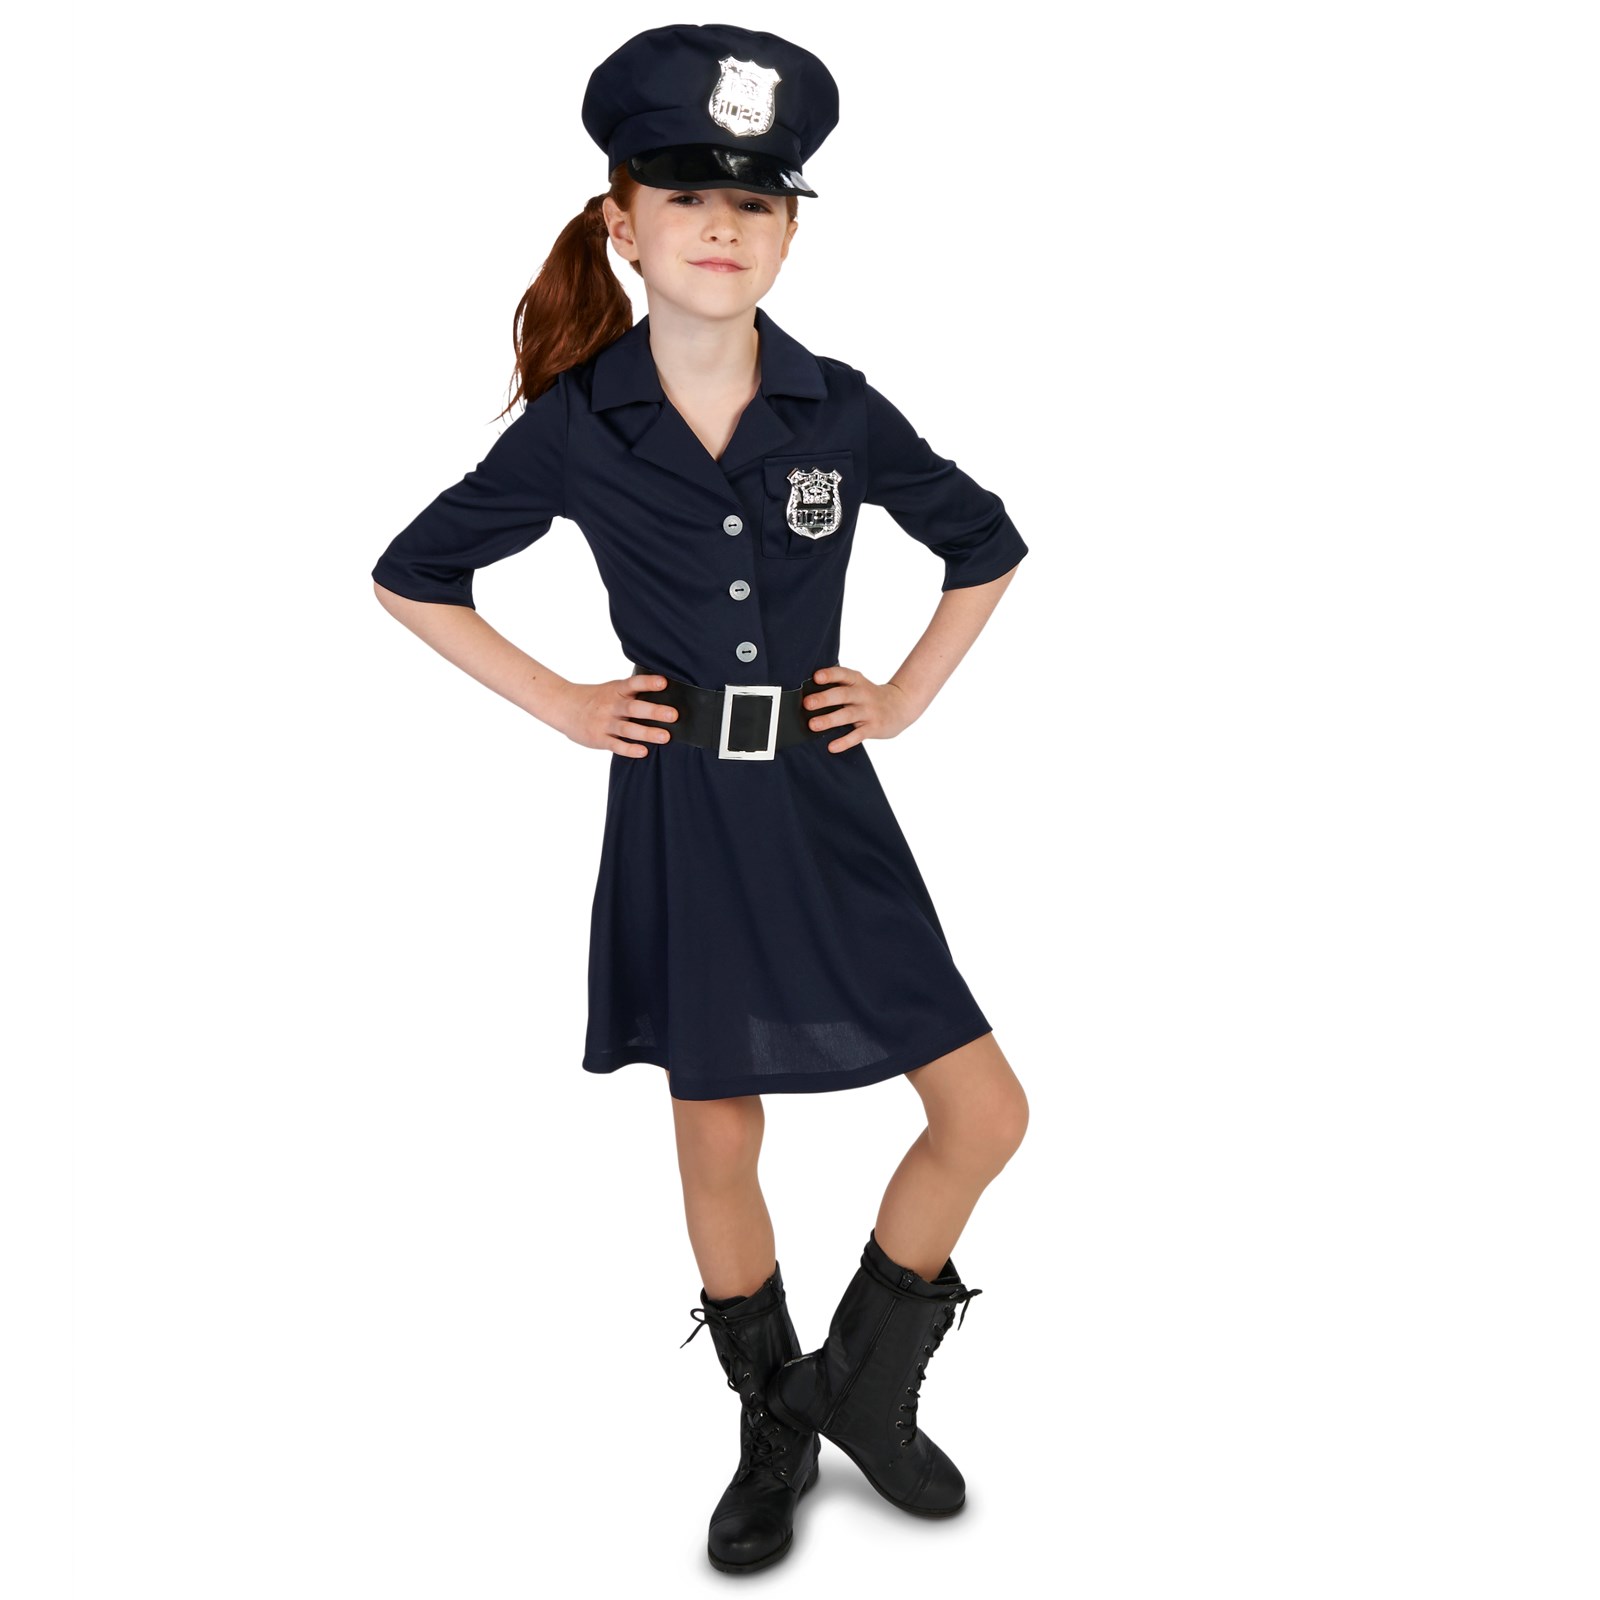 Police Girl Child Costume | BuyCostumes.com